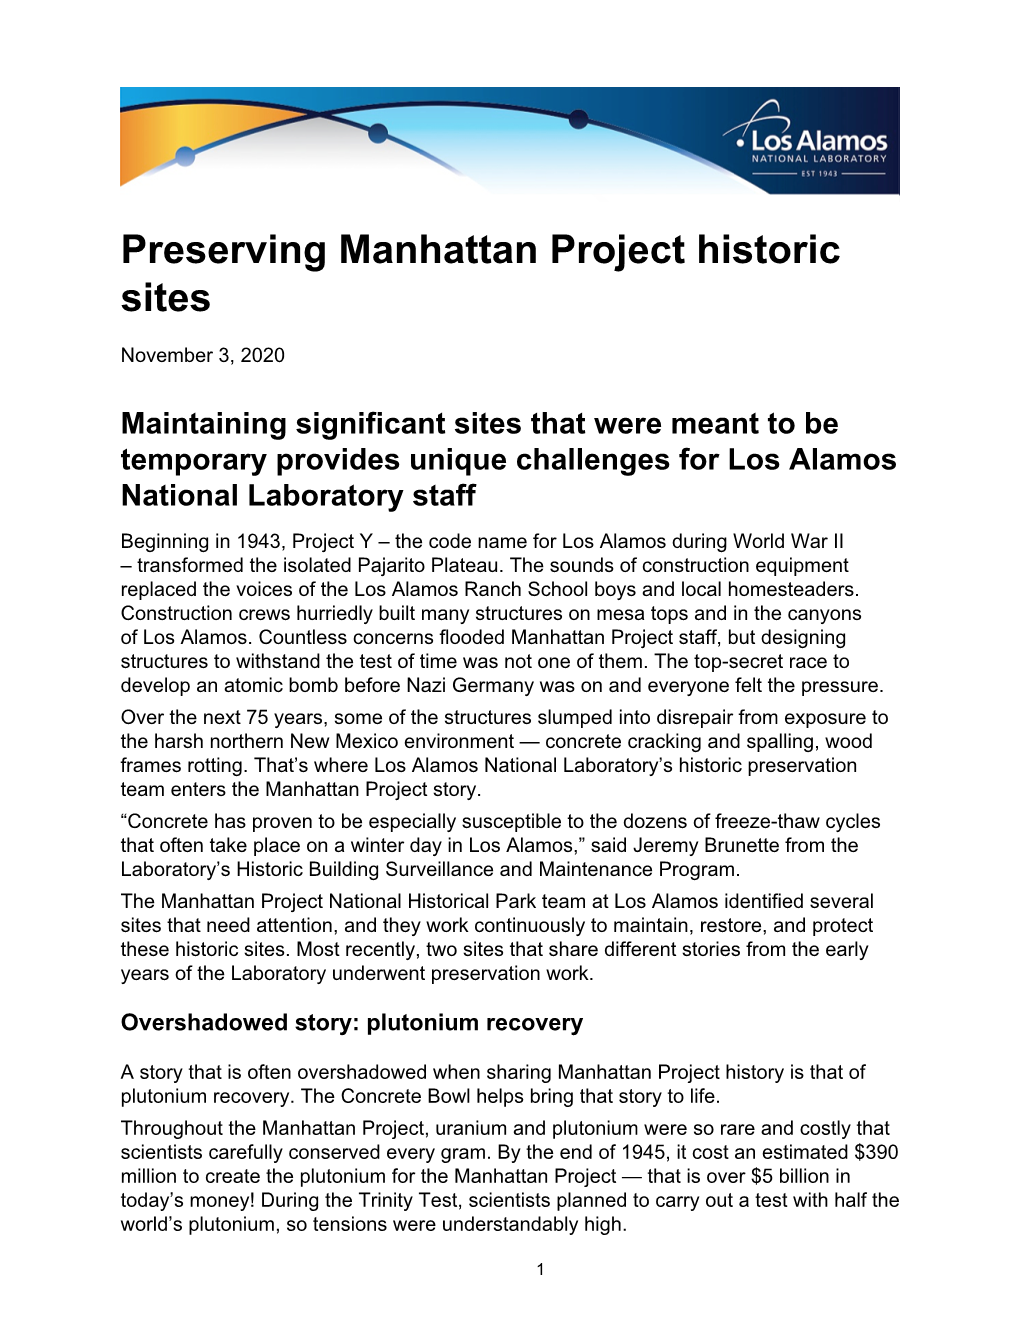 Preserving Manhattan Project Historic Sites